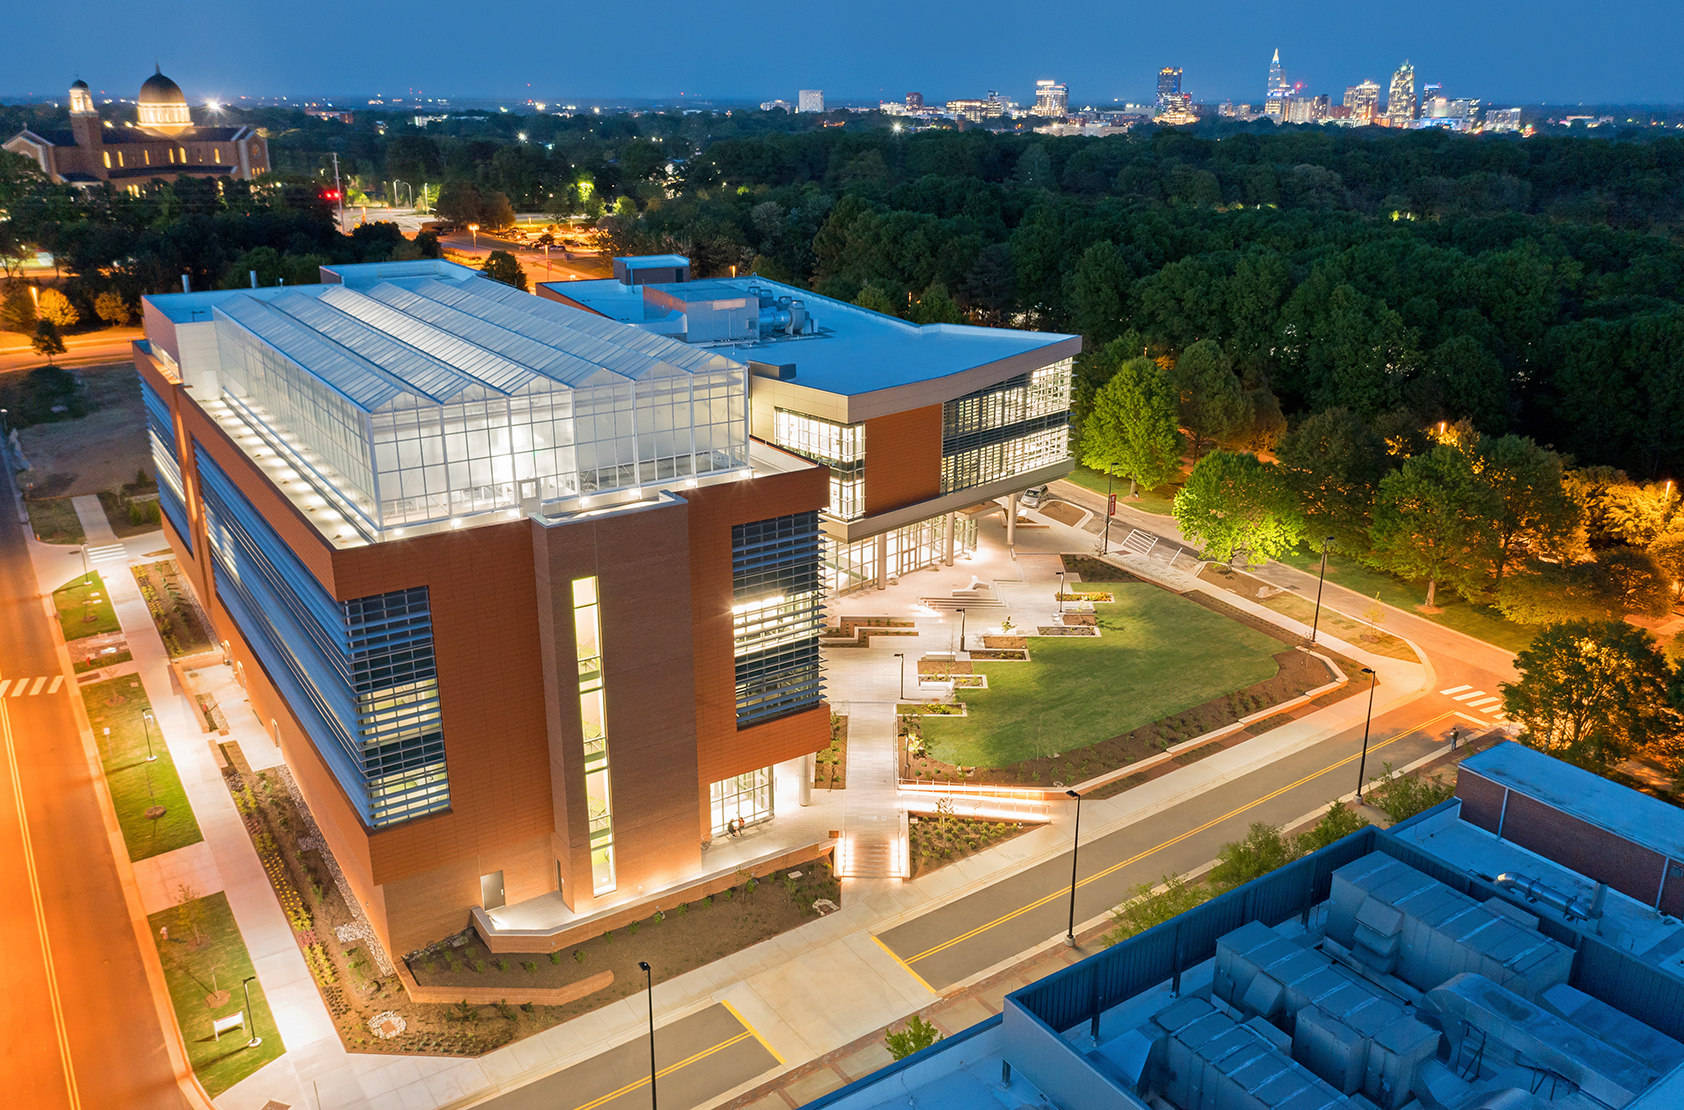 North Carolina State University Plant Sciences Building At Night Wallpaper